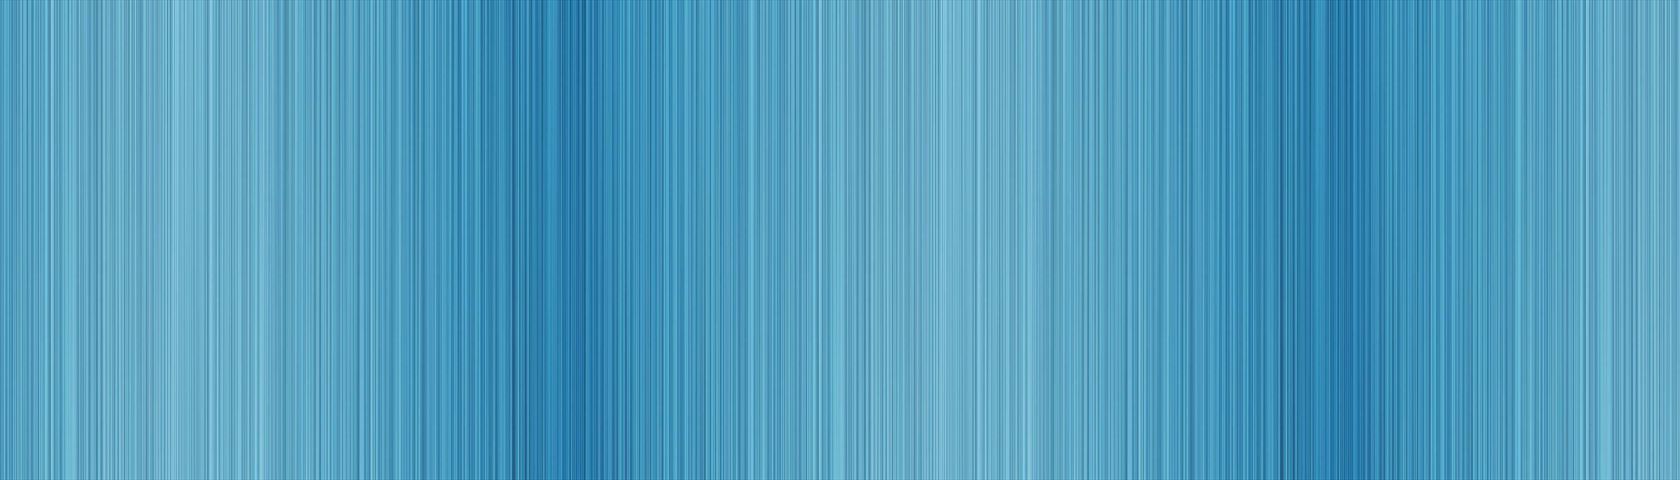 Light Blue Vertical Lines